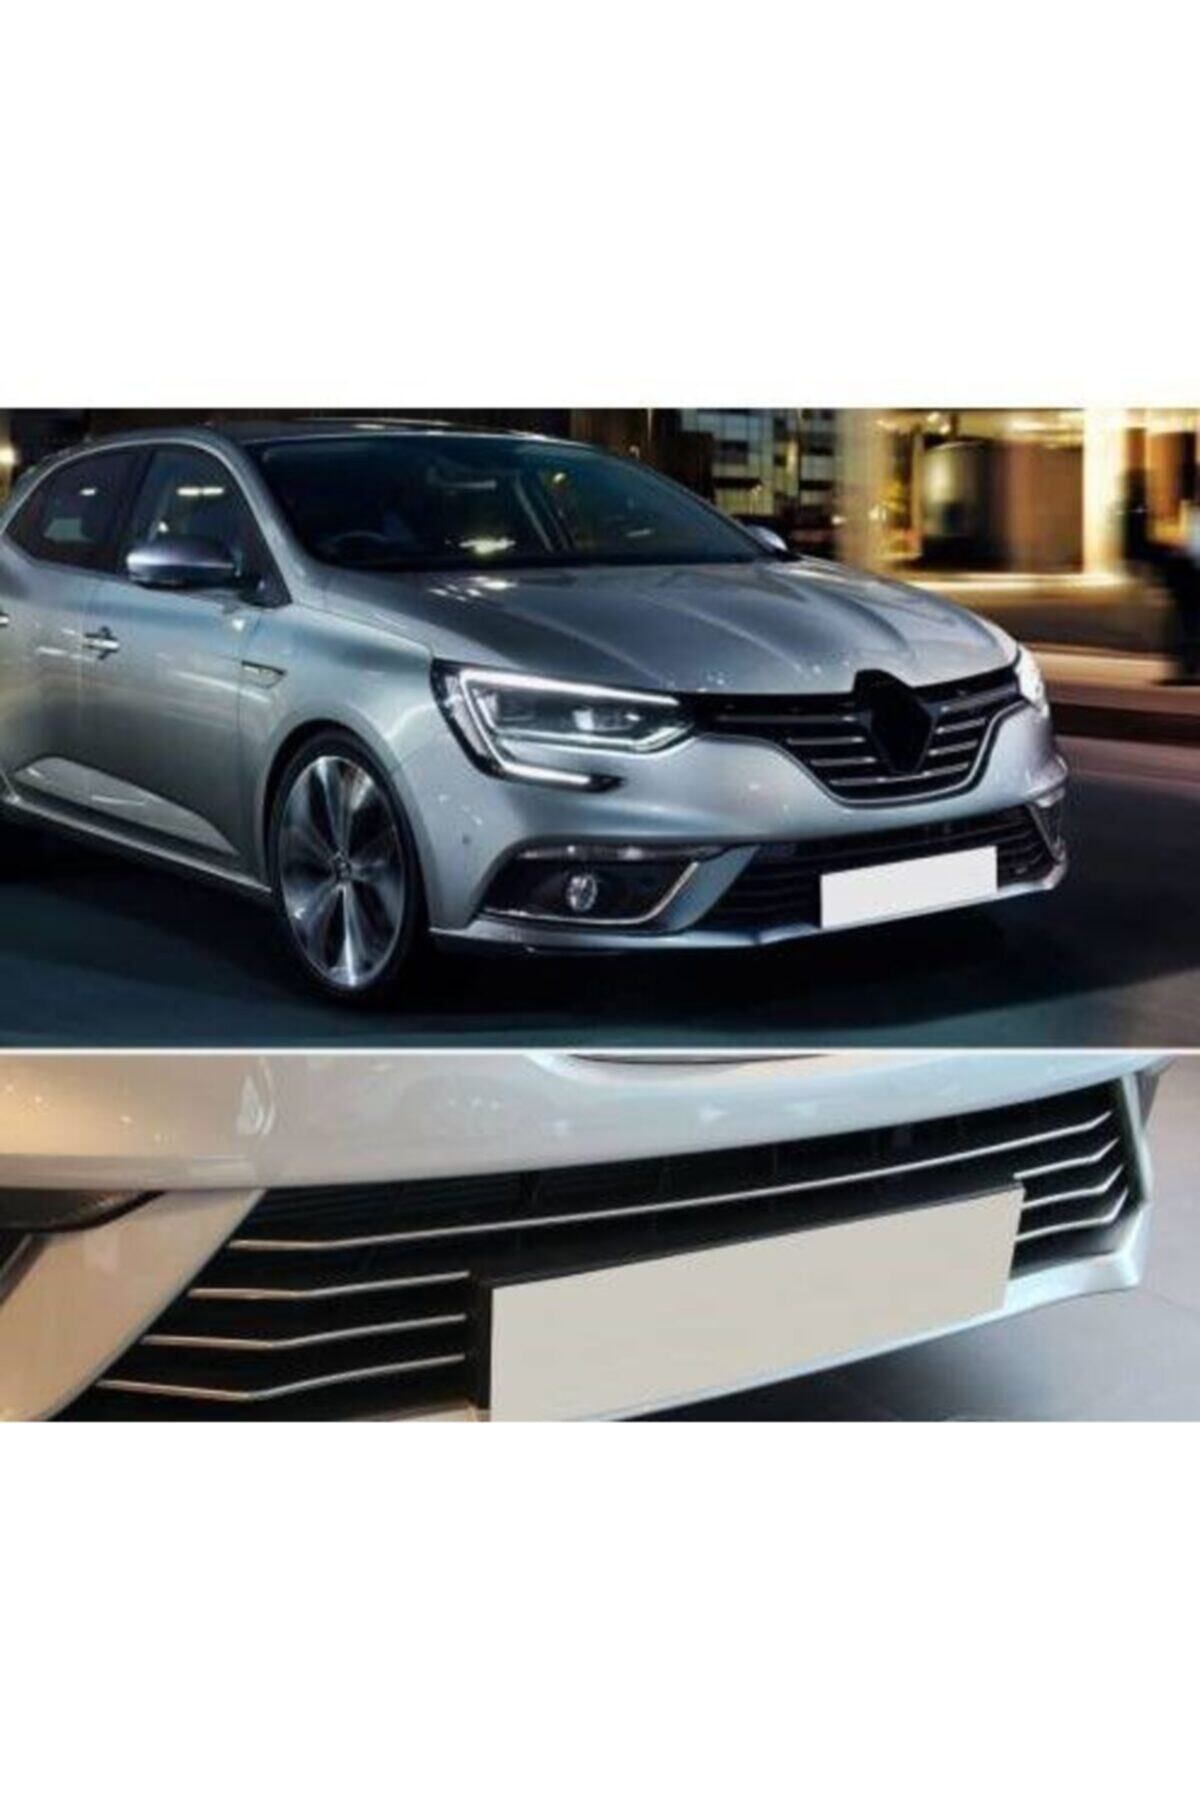 OTOTUNING53 Renault megane 4 hb-sedan krom ön tampon çıtası 7 prç 2016-2020